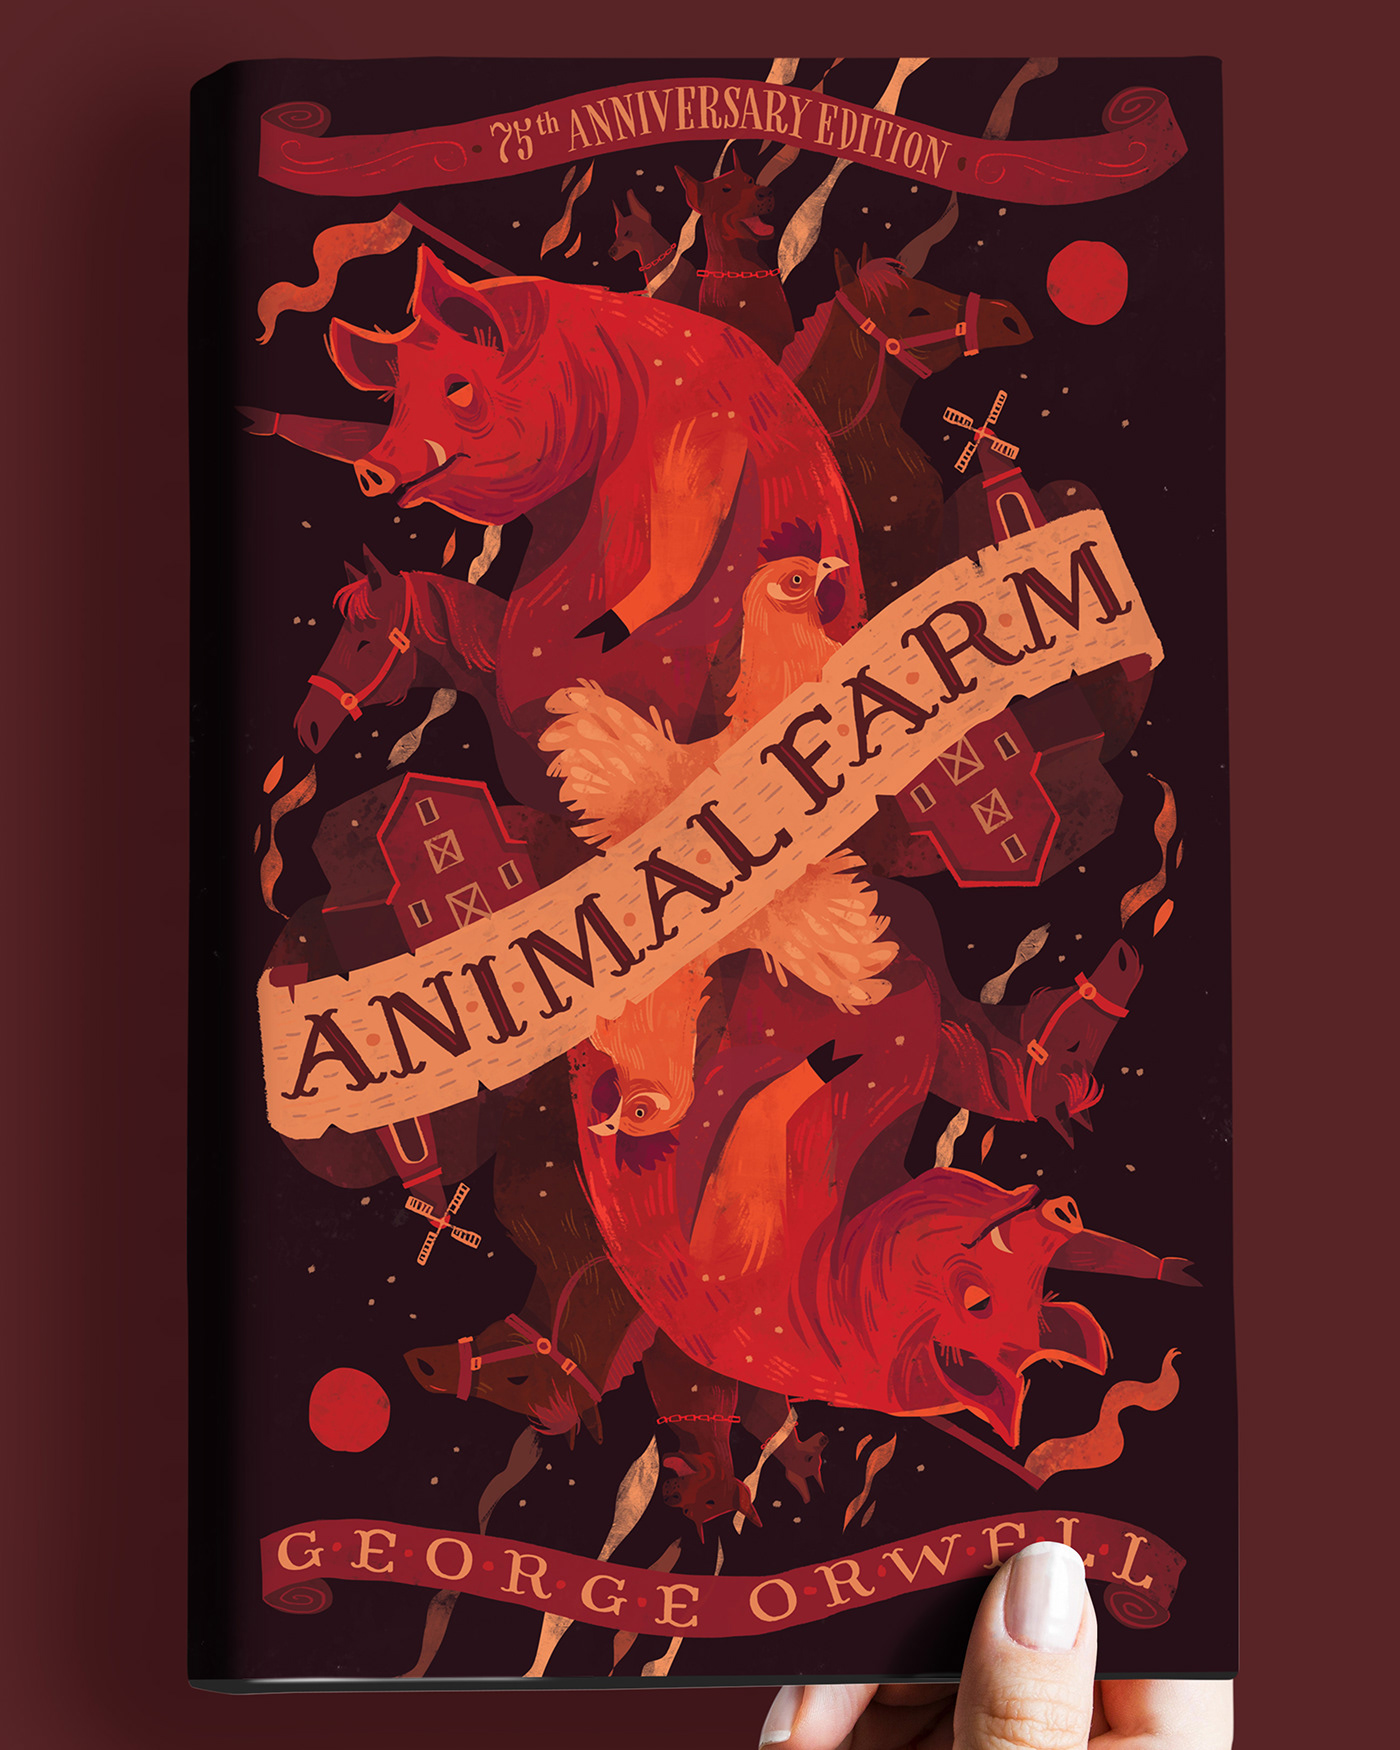 Animal Farm animal farm cover Book Cover Design book cover illustration classic book cover George Orwell illustrated cover pig illustration